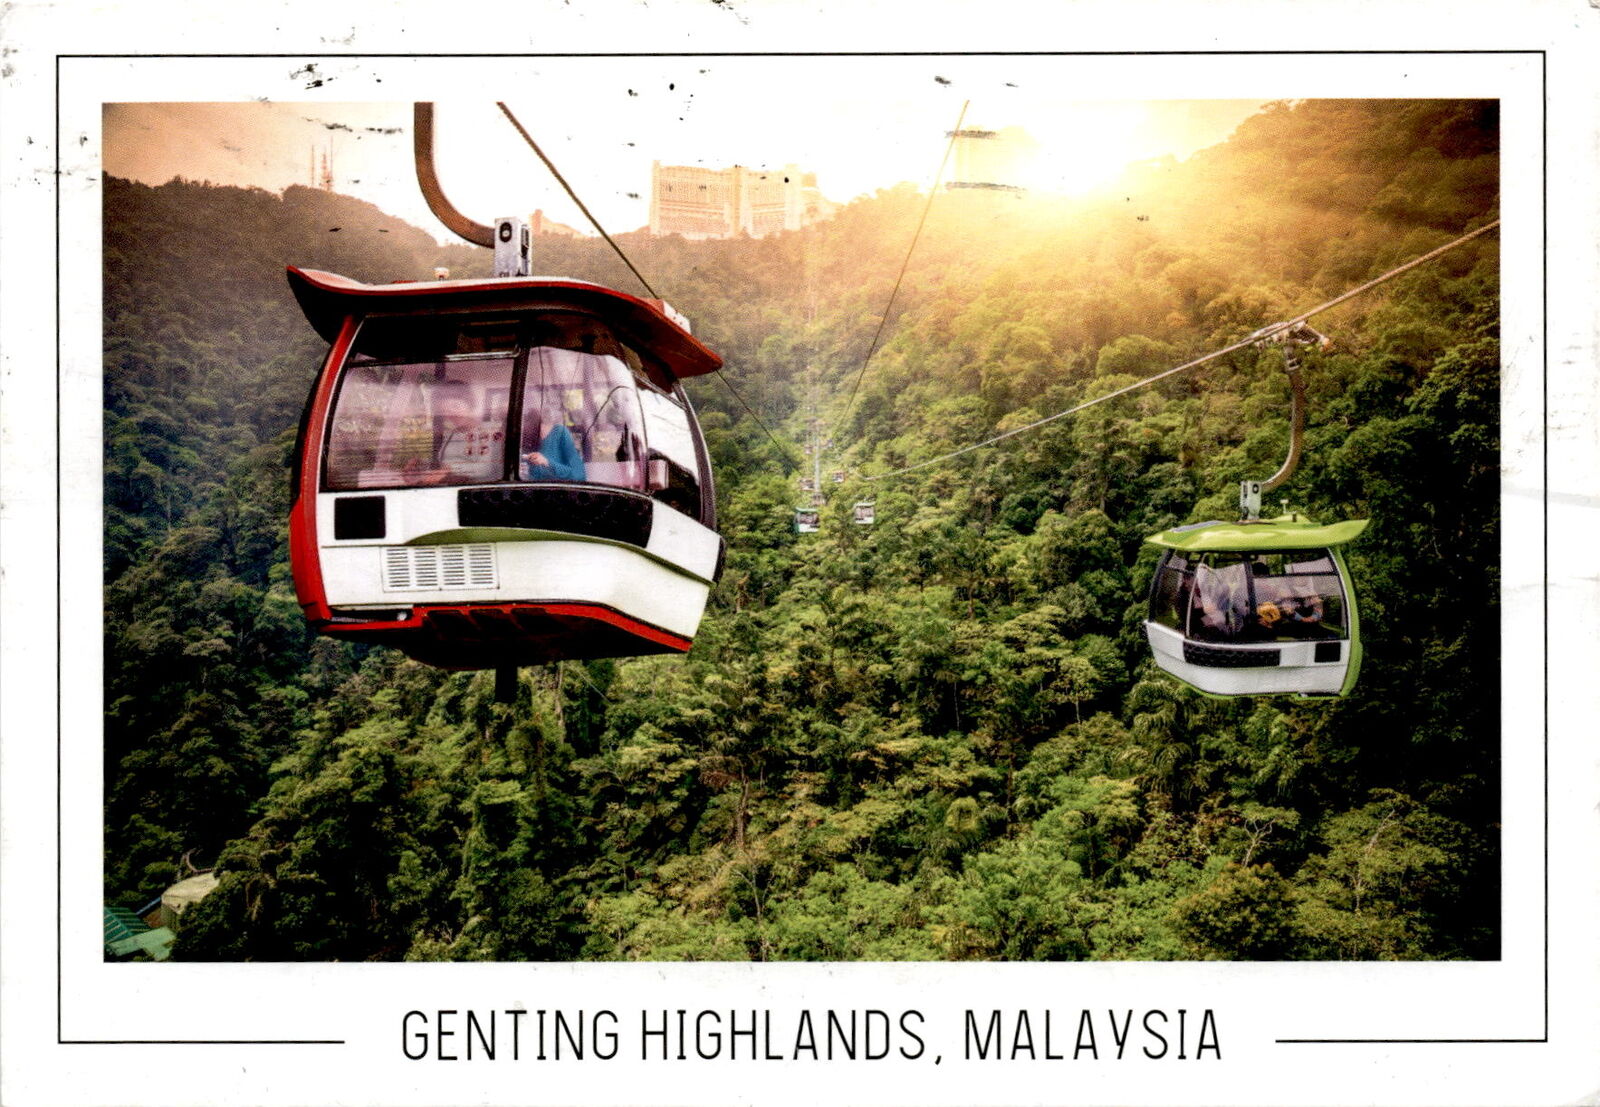 Malaysia Postcard: Culture, Nature, Positivity, Stay Safe